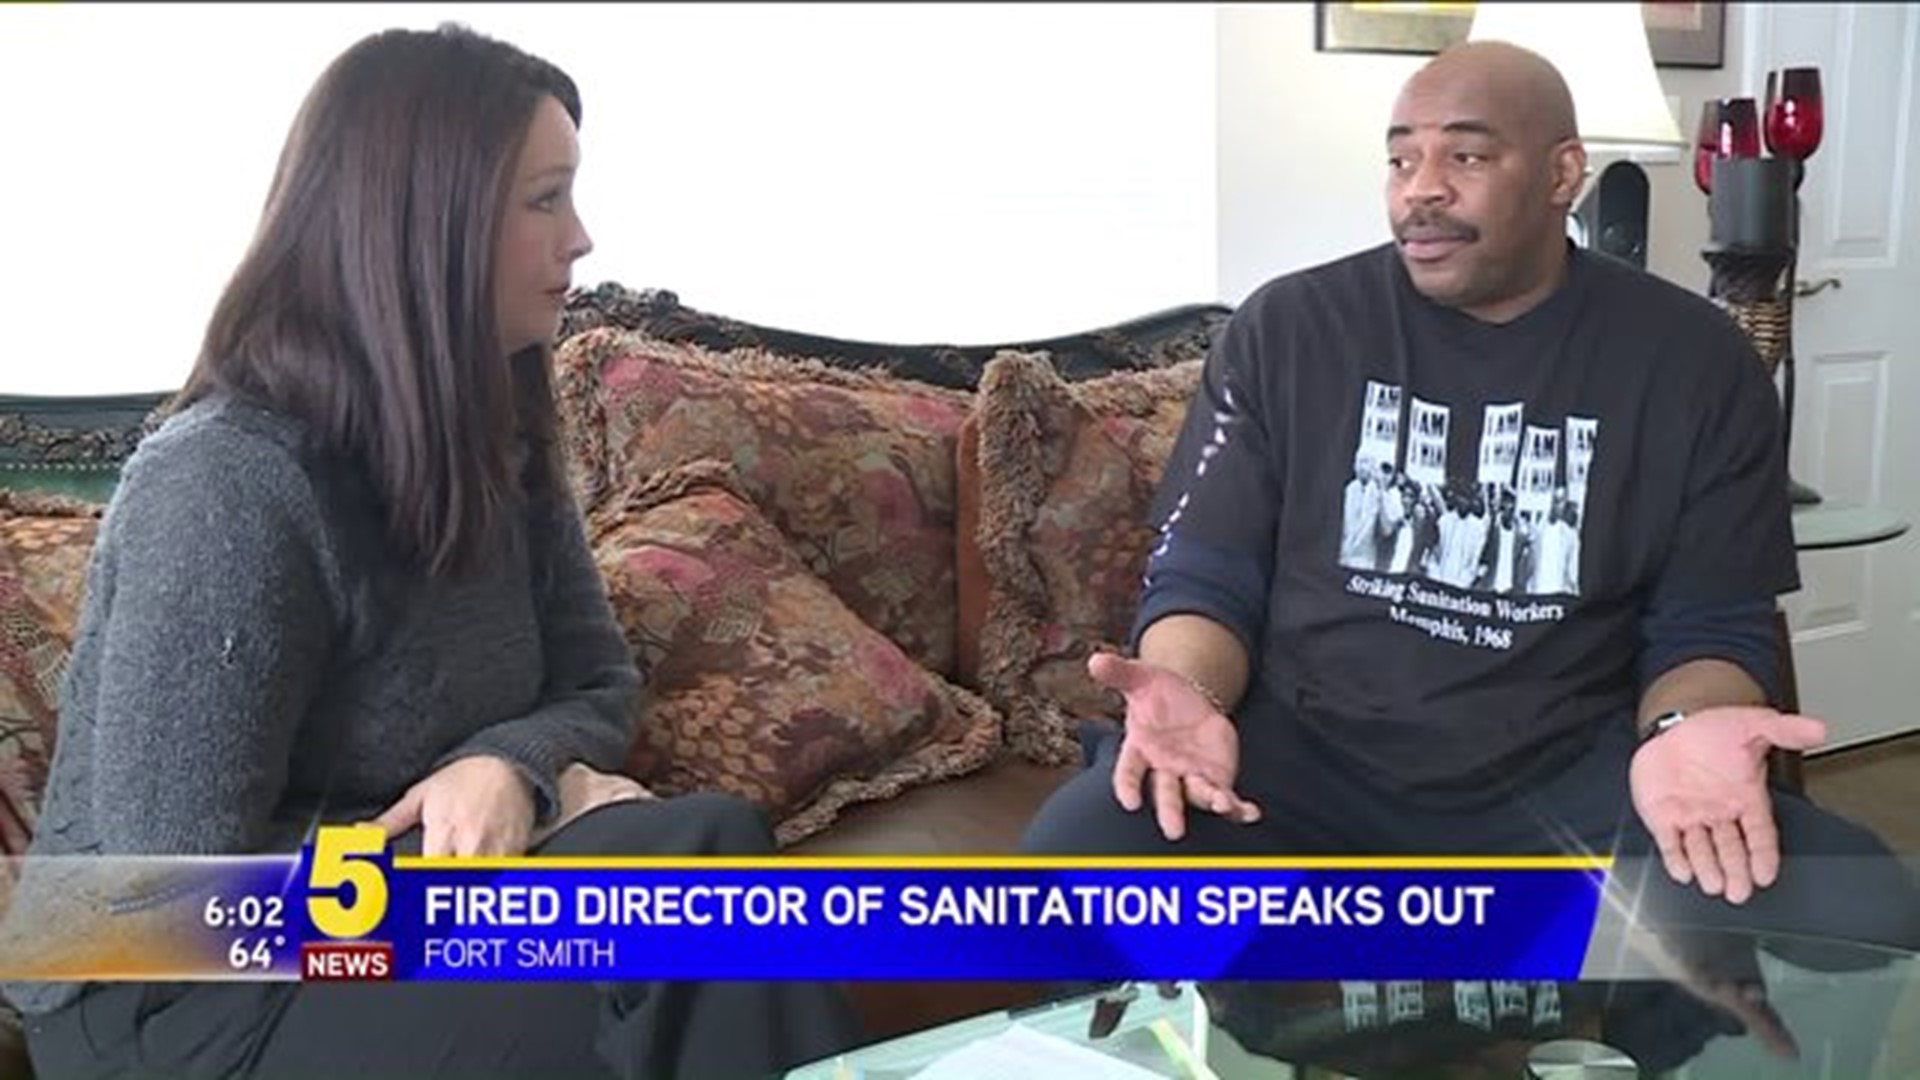 Fired Sanitation Director Speaks Out